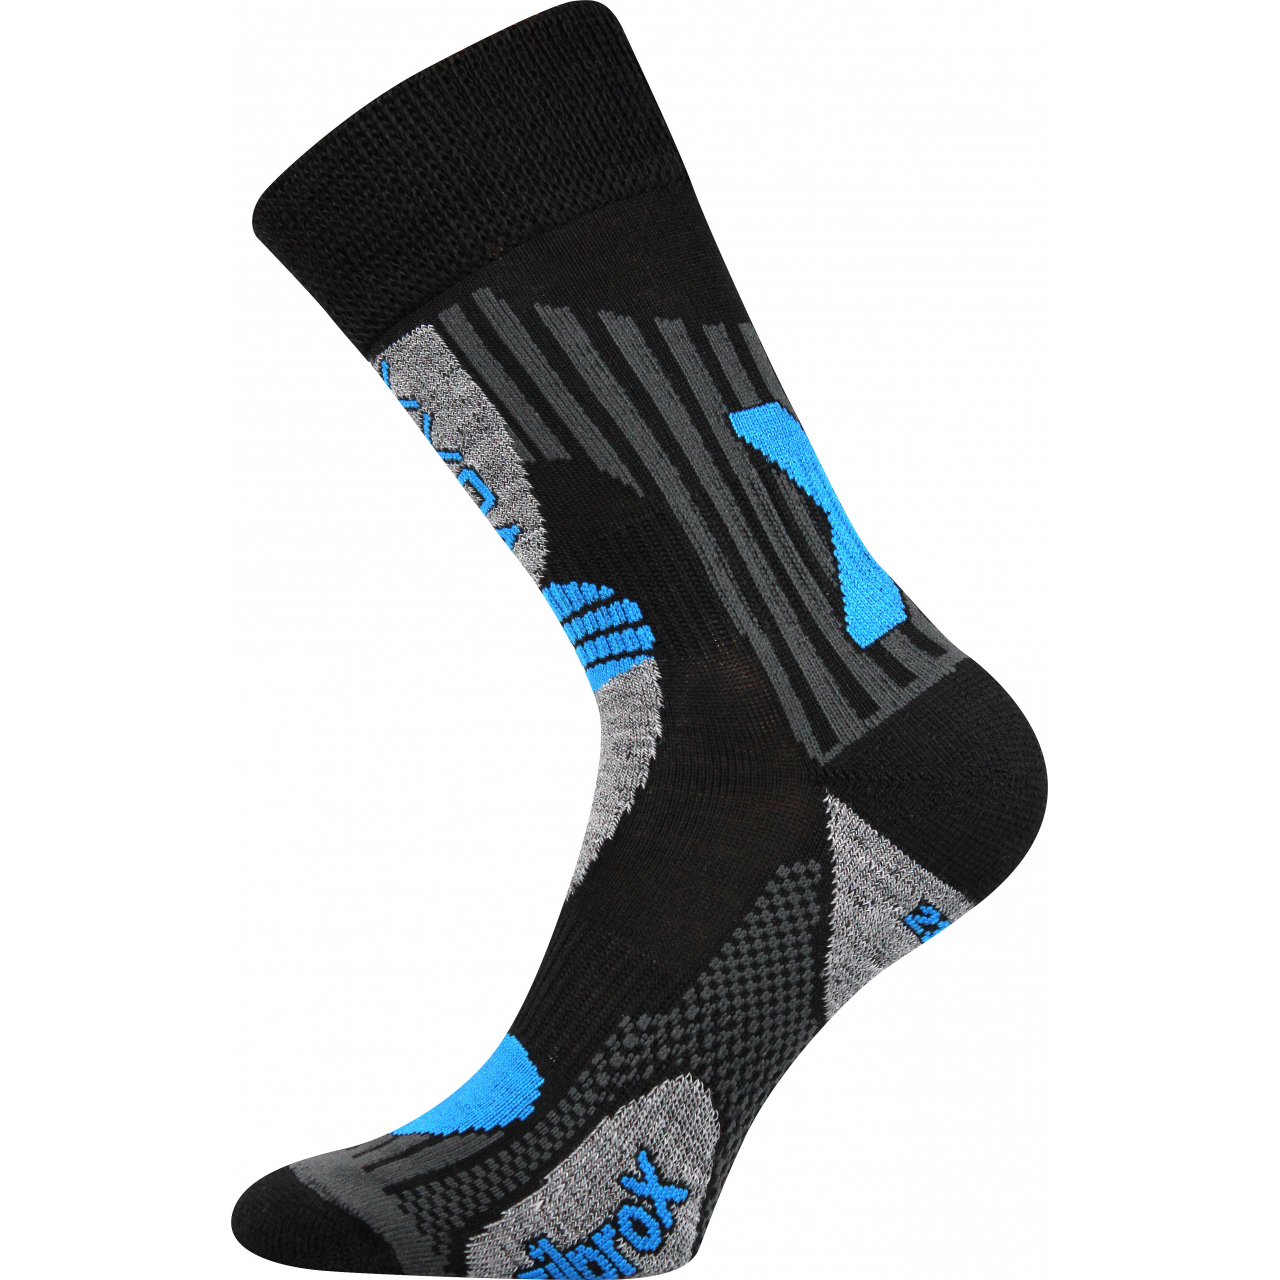 Ponožky unisex termo Voxx Vision - černé-modré, 35-38